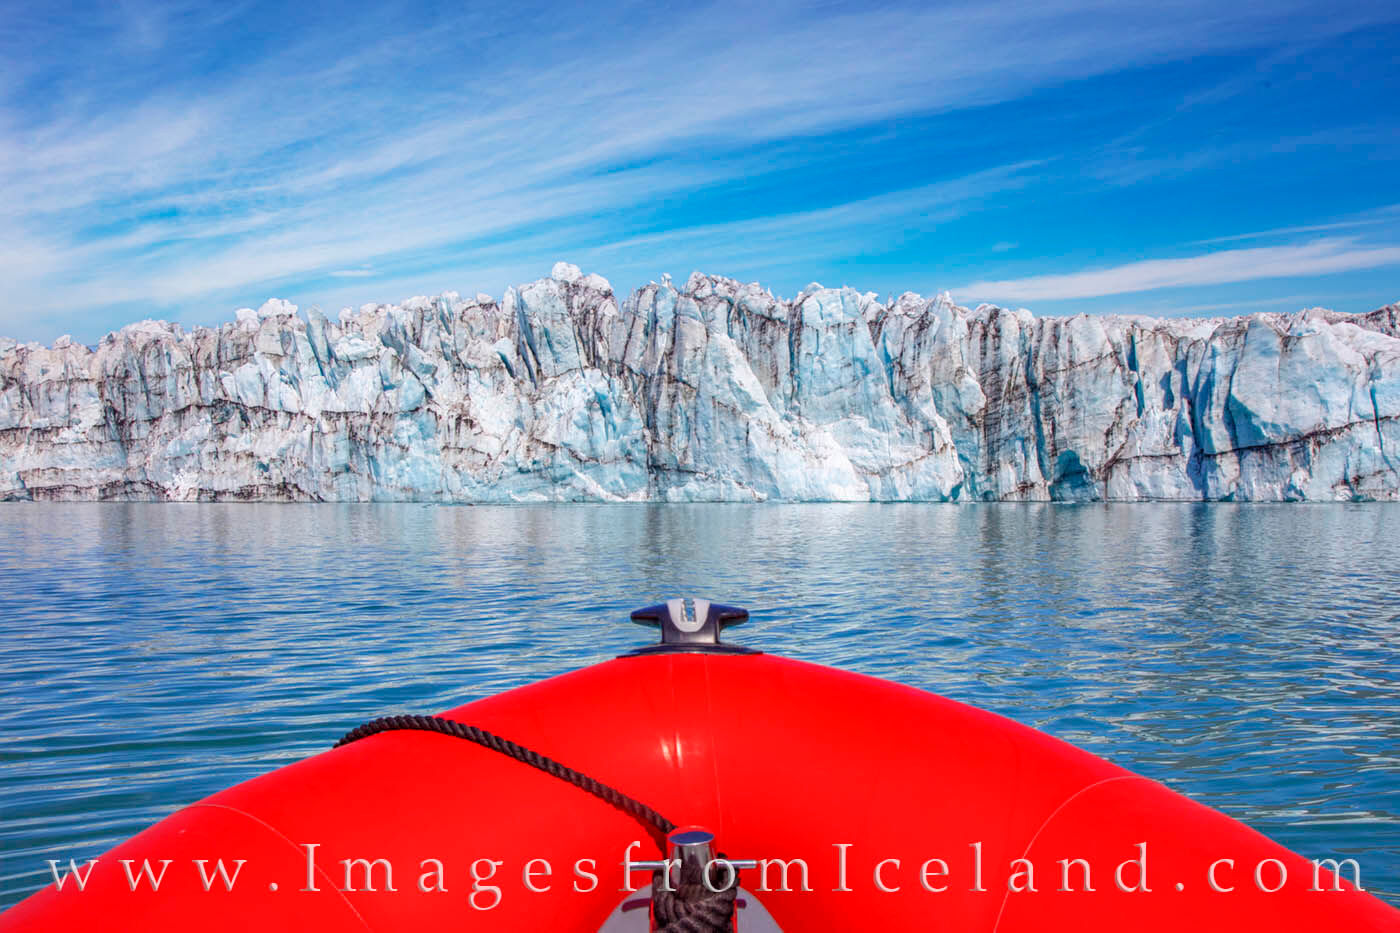 Breiðamerkurjökull Glacier looms in front of our tiny Zodiac boat on a cold summer morning in Jökulsárlón Lagoon. From this...